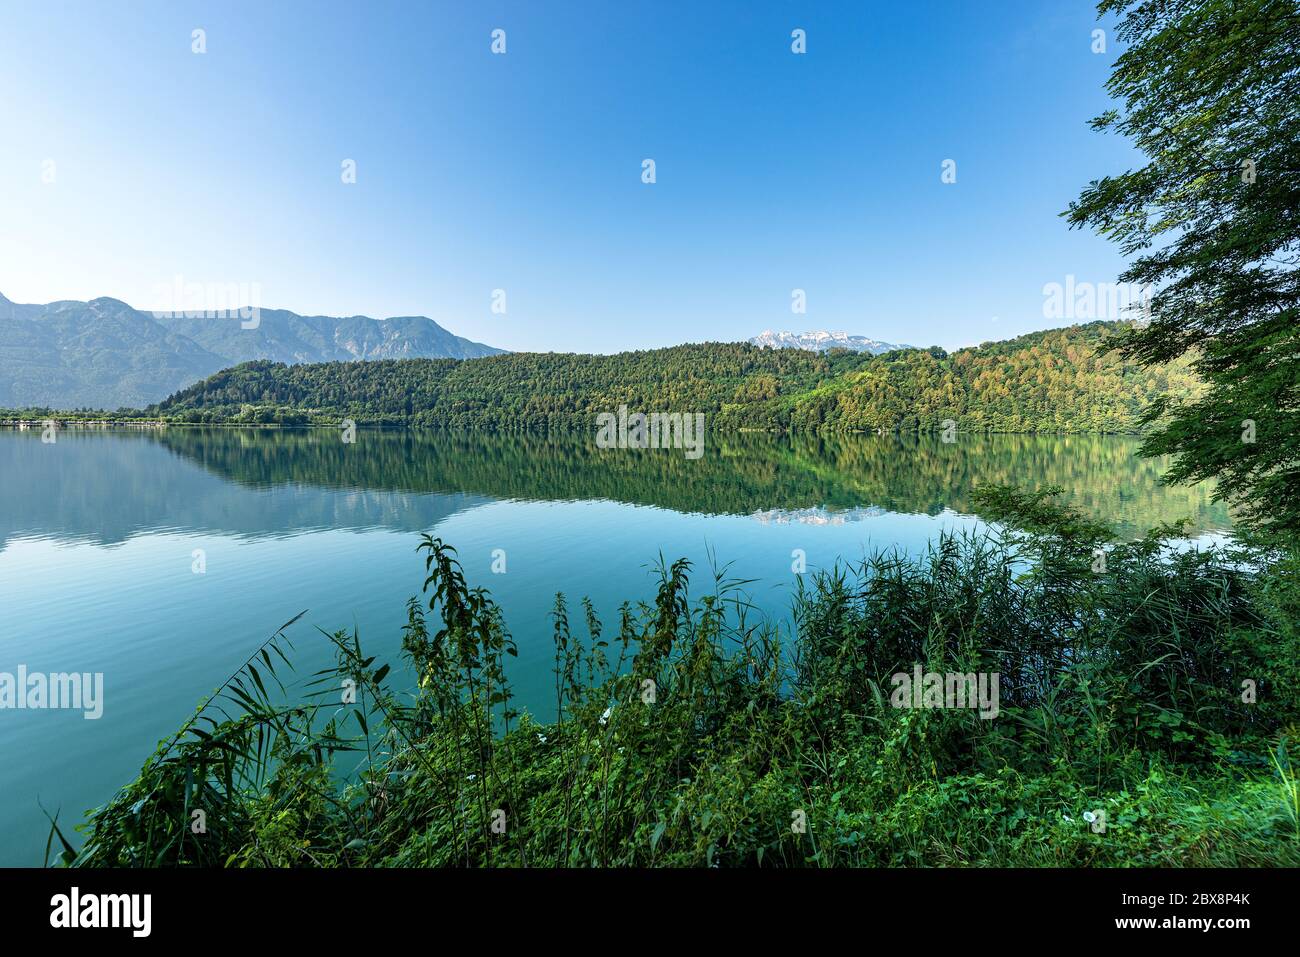 Lago di Levico, small beautiful lake in Italian Alps, Levico Terme town, Trento province, Trentino Alto Adige, Italy, Europe Stock Photo